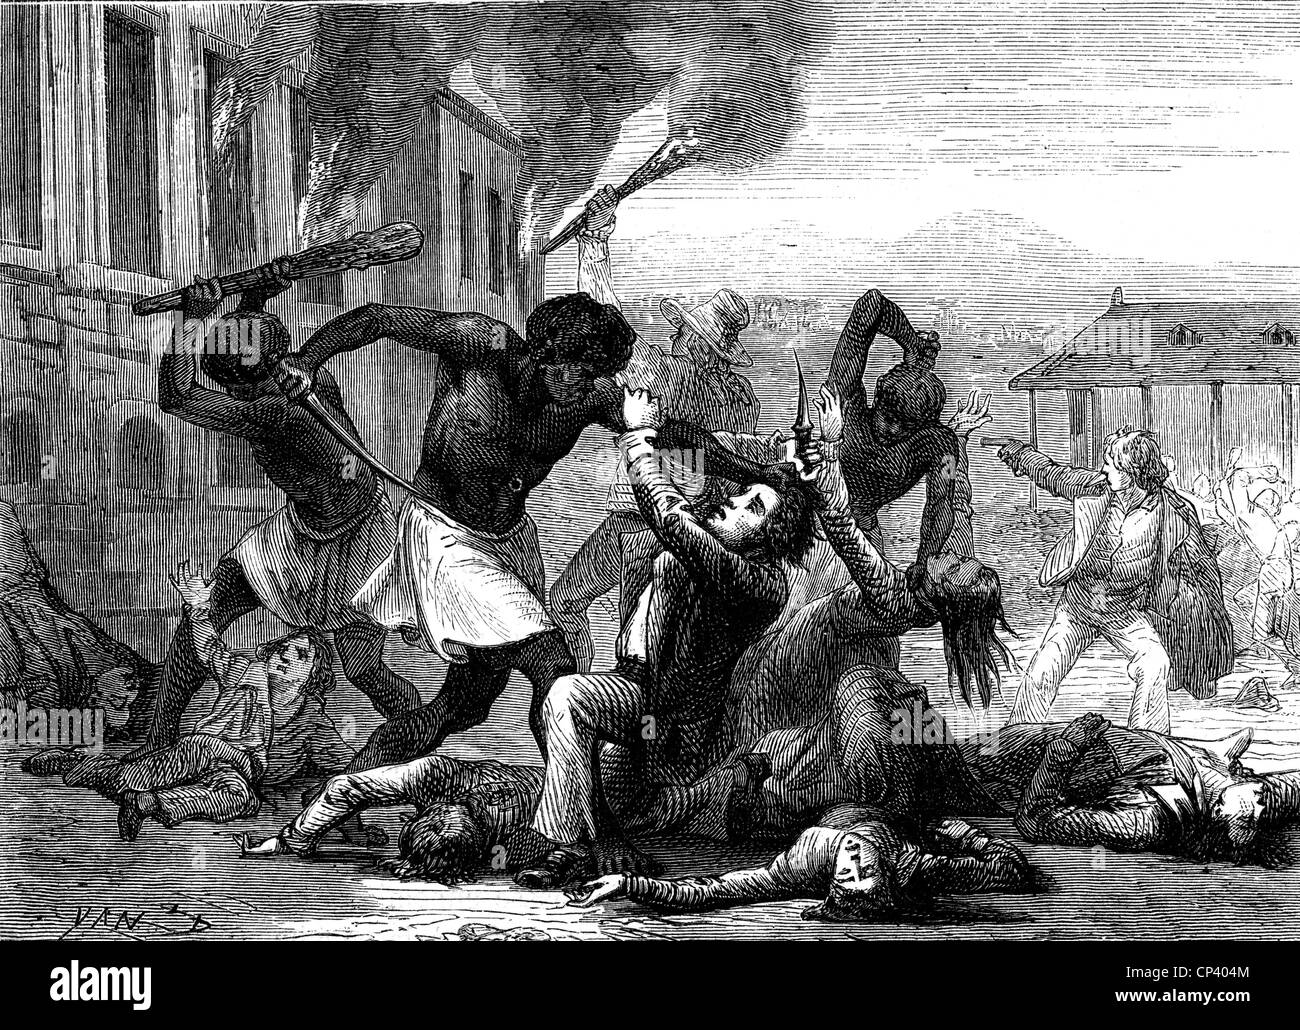 events-haitian-revolution-1791-1804-black-slaves-attack-whites-wood-CP404M.jpg